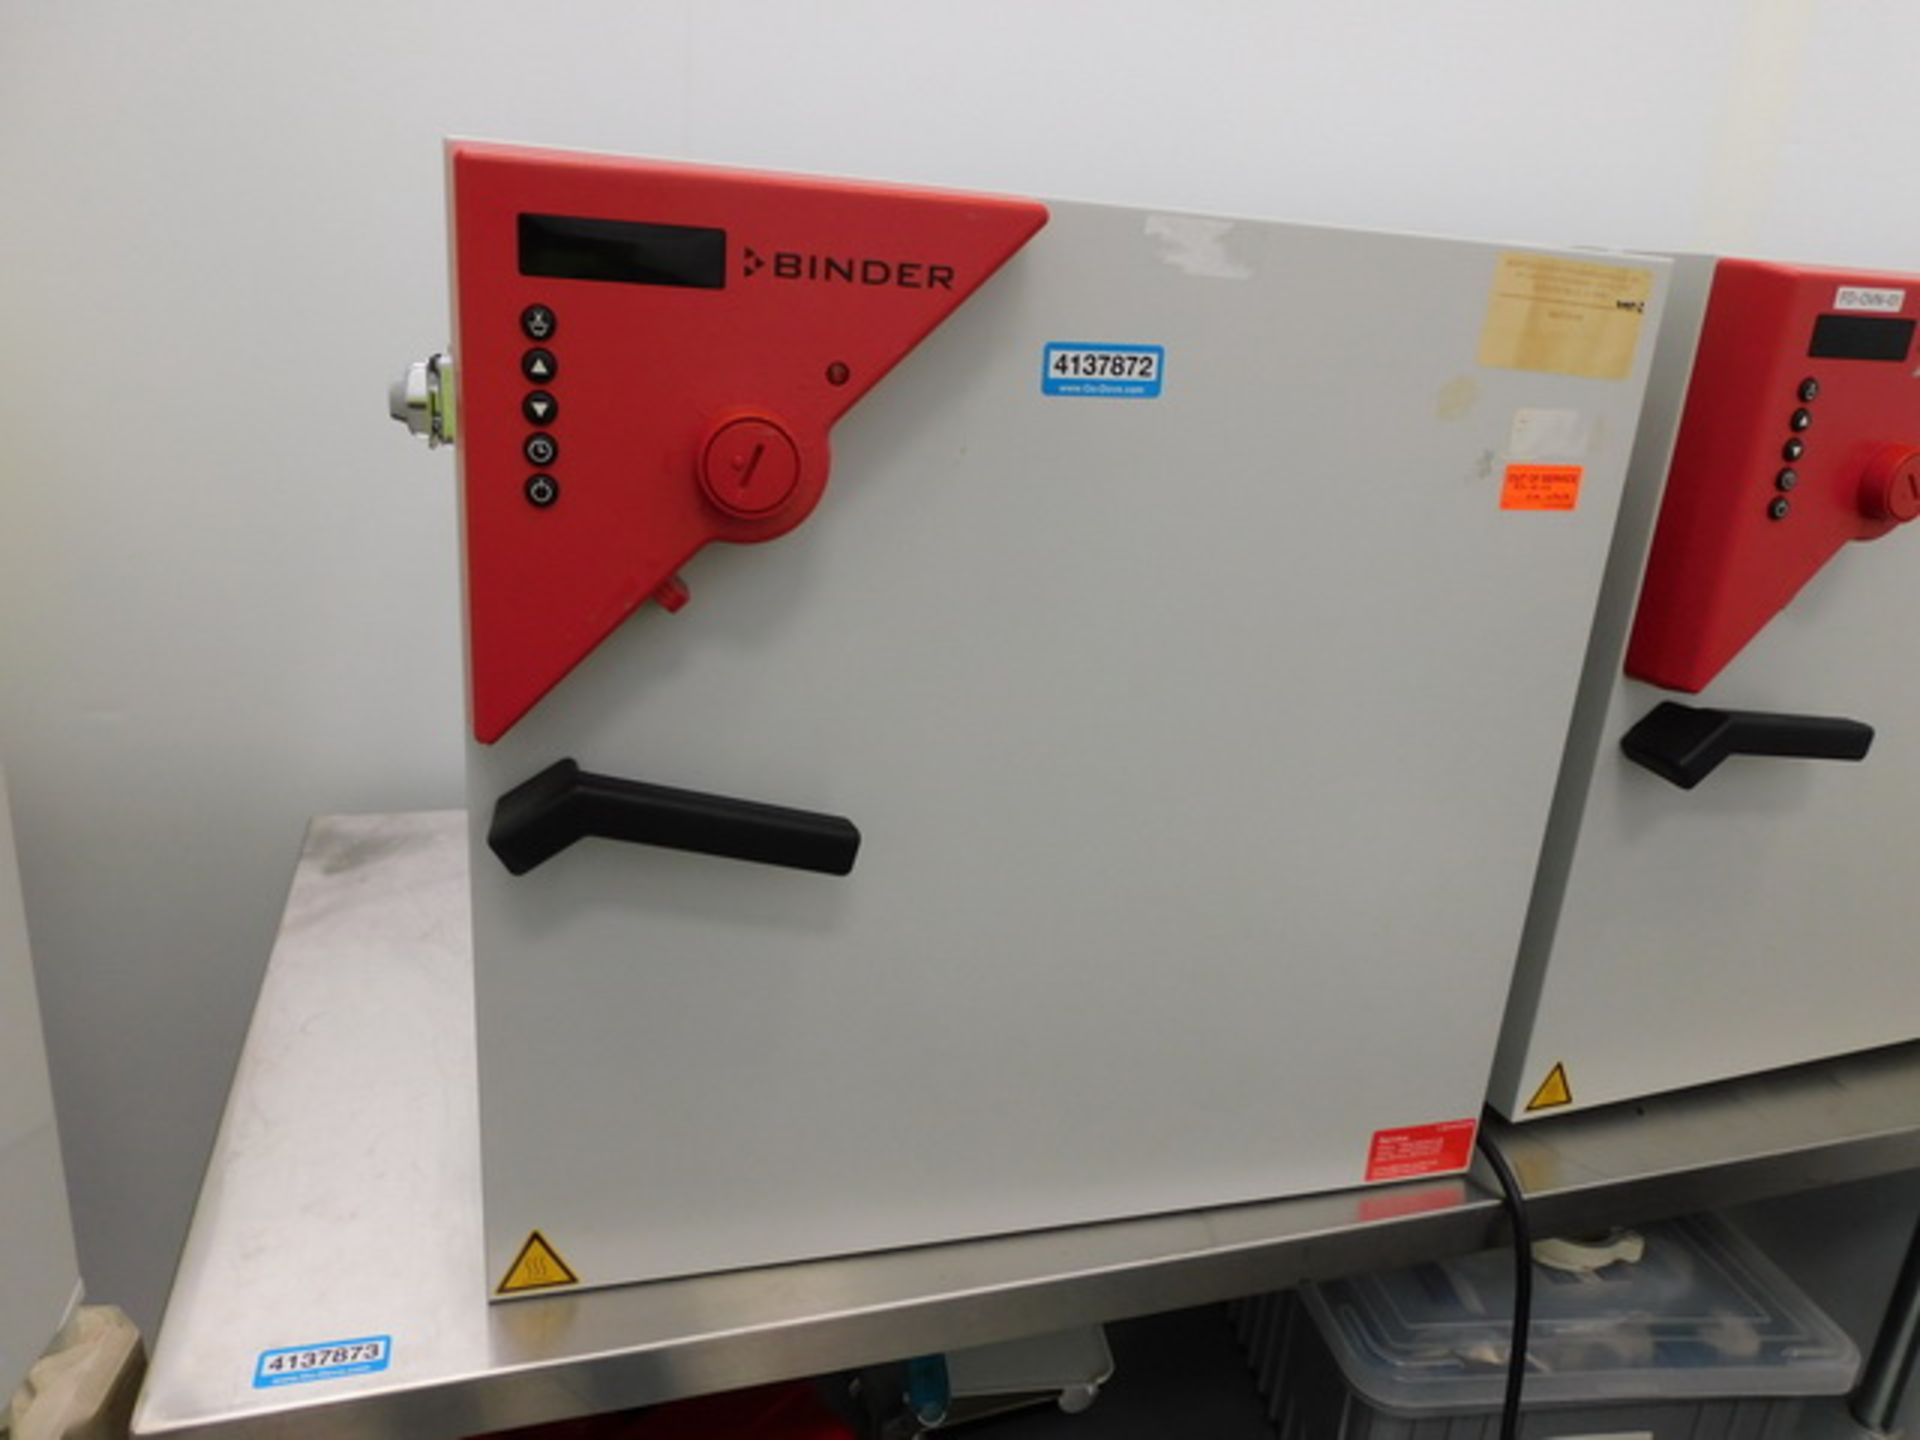 Binder Laboratory Oven, model ED 53-UL, 572 f max temp, 1.2 kw, 115 volt, serial# 05-84642